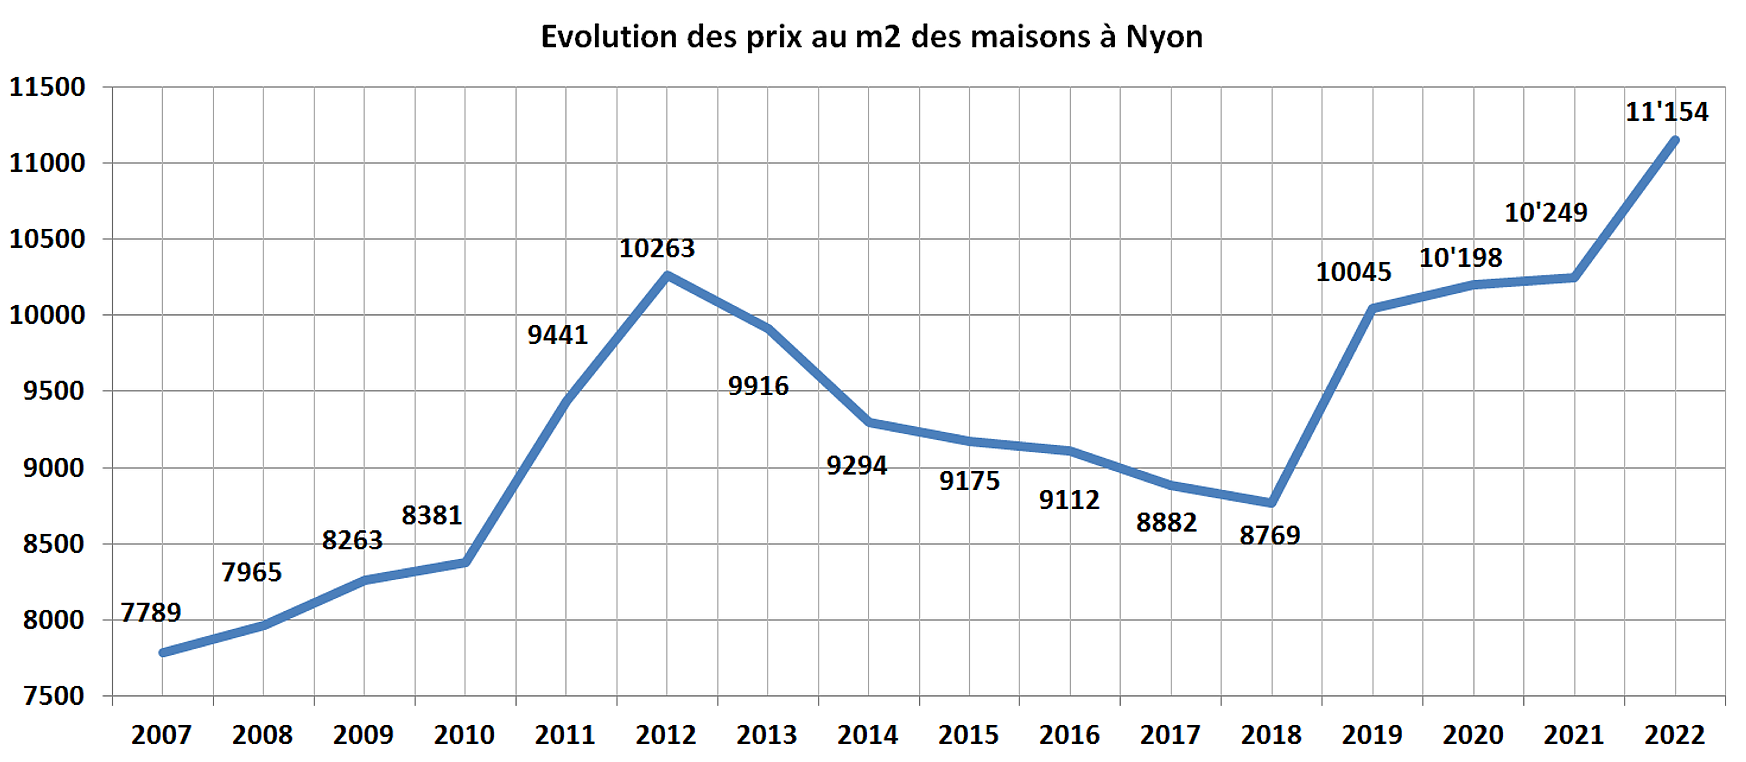 evolution prix m2 maison nyon 2022